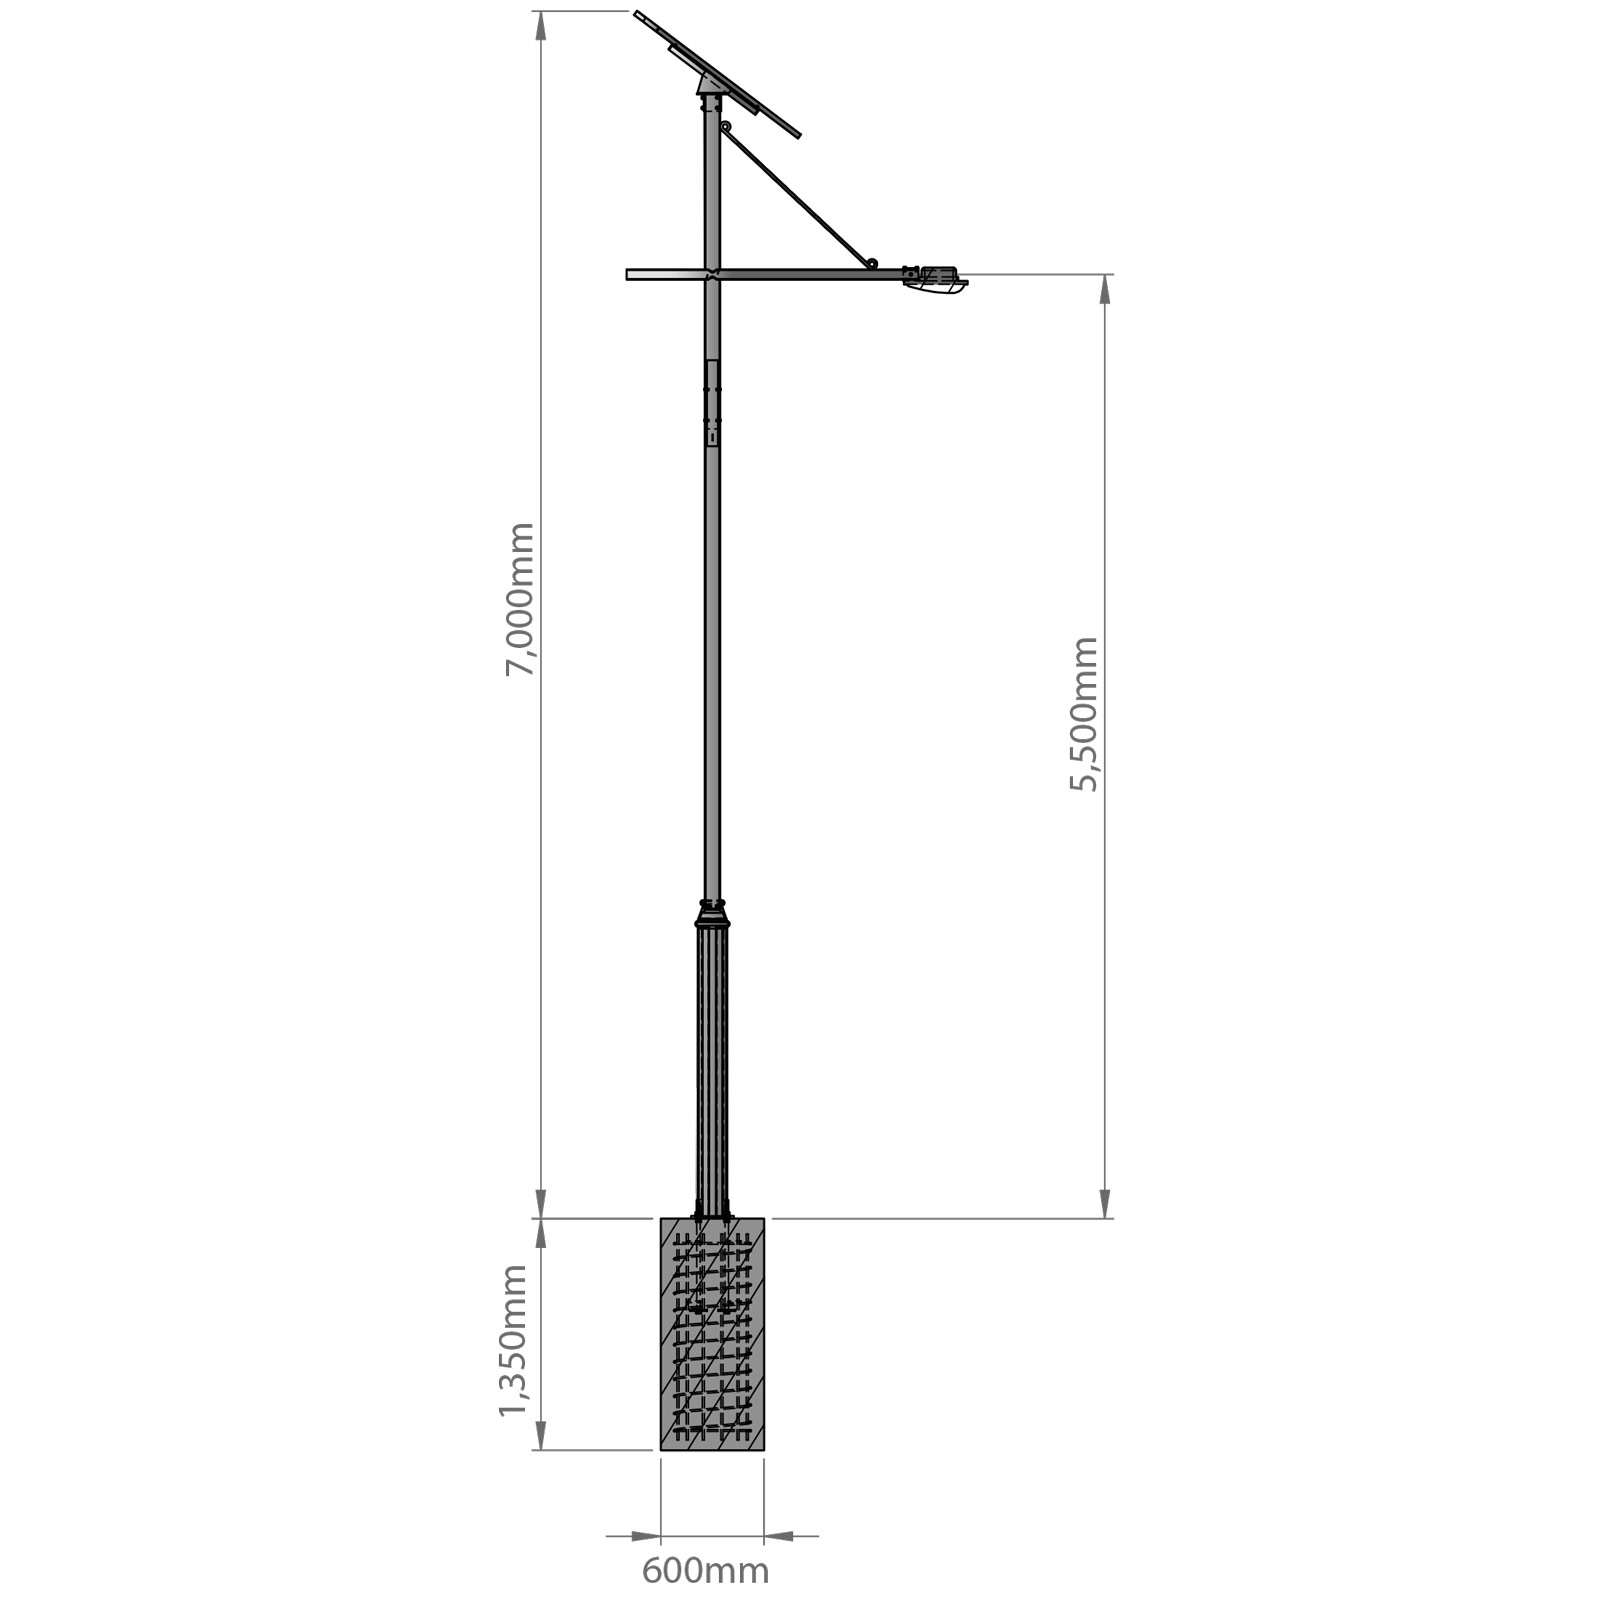 Solar Lights Pole technical drawing